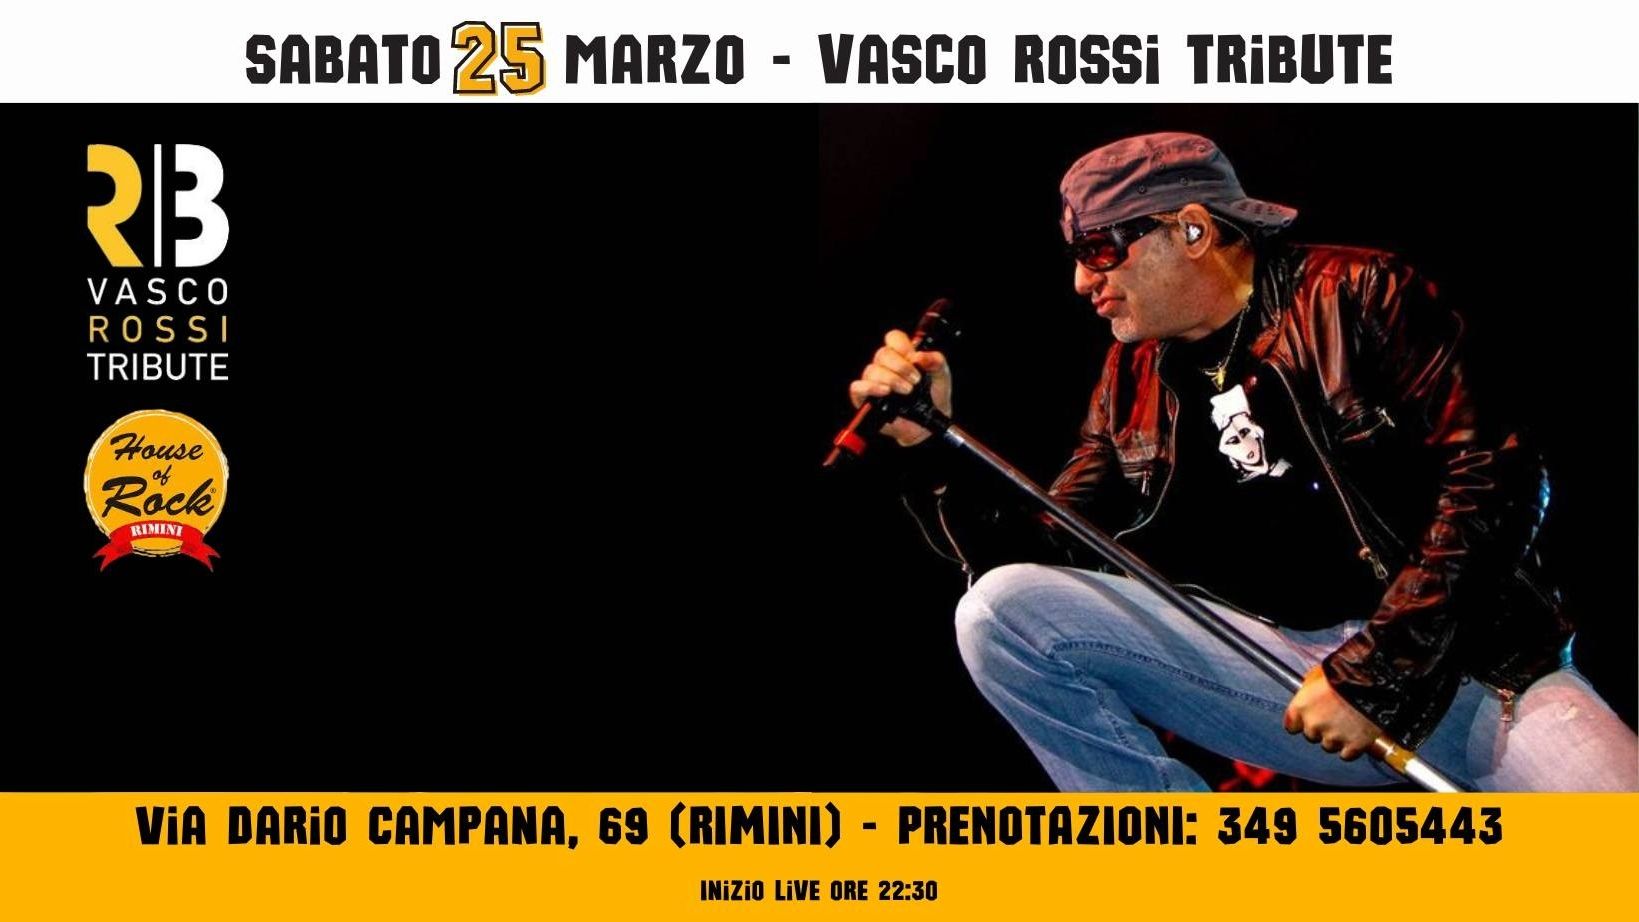 Vasco Rossi Tribute - Roxybar